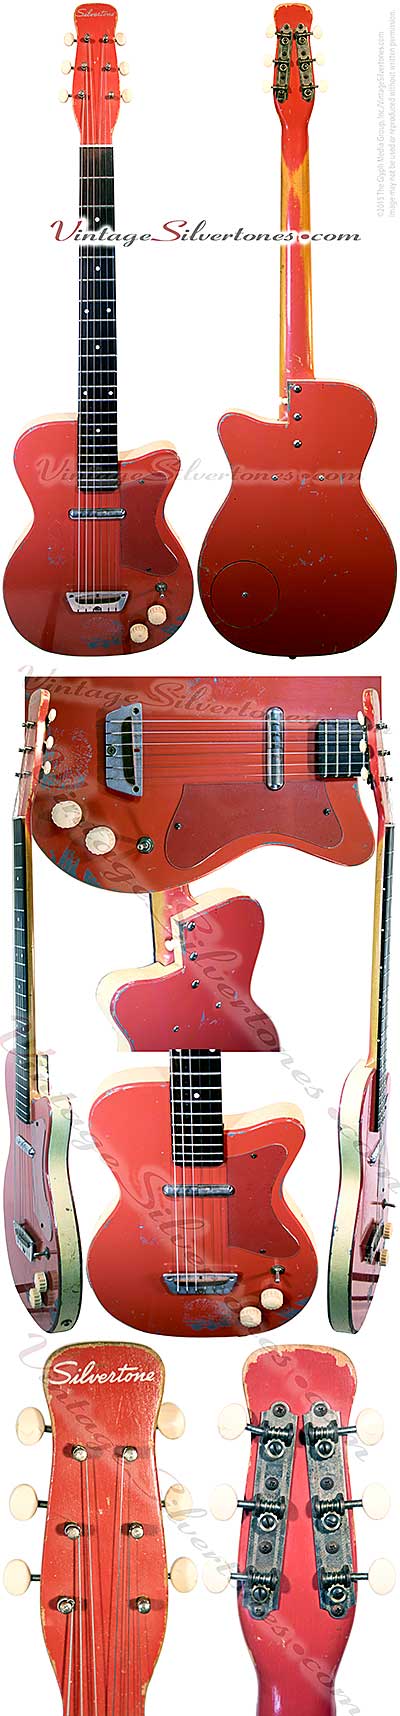 Silvertone 1358 made by Danelectro U1, one pickup, electric guitar, semi-hollow body, coral finish white vinyl binding, masonite body, lipstick pickup, made in 1955